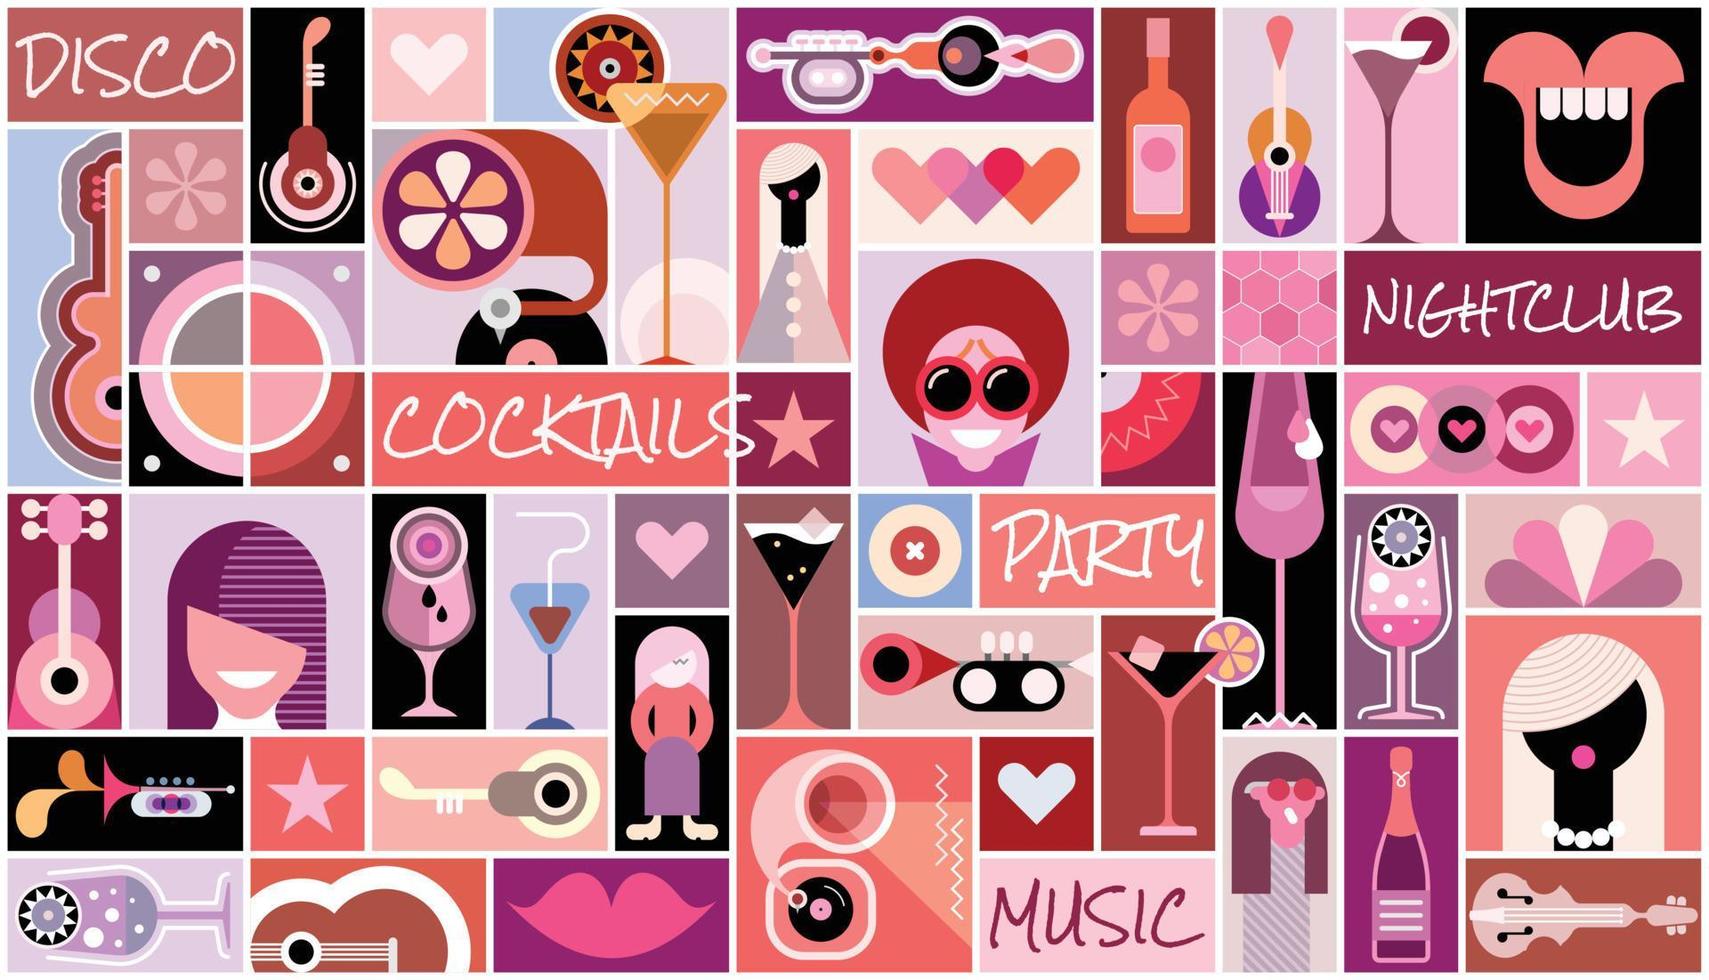 Disco-Party-Pop-Art-Collage vektor